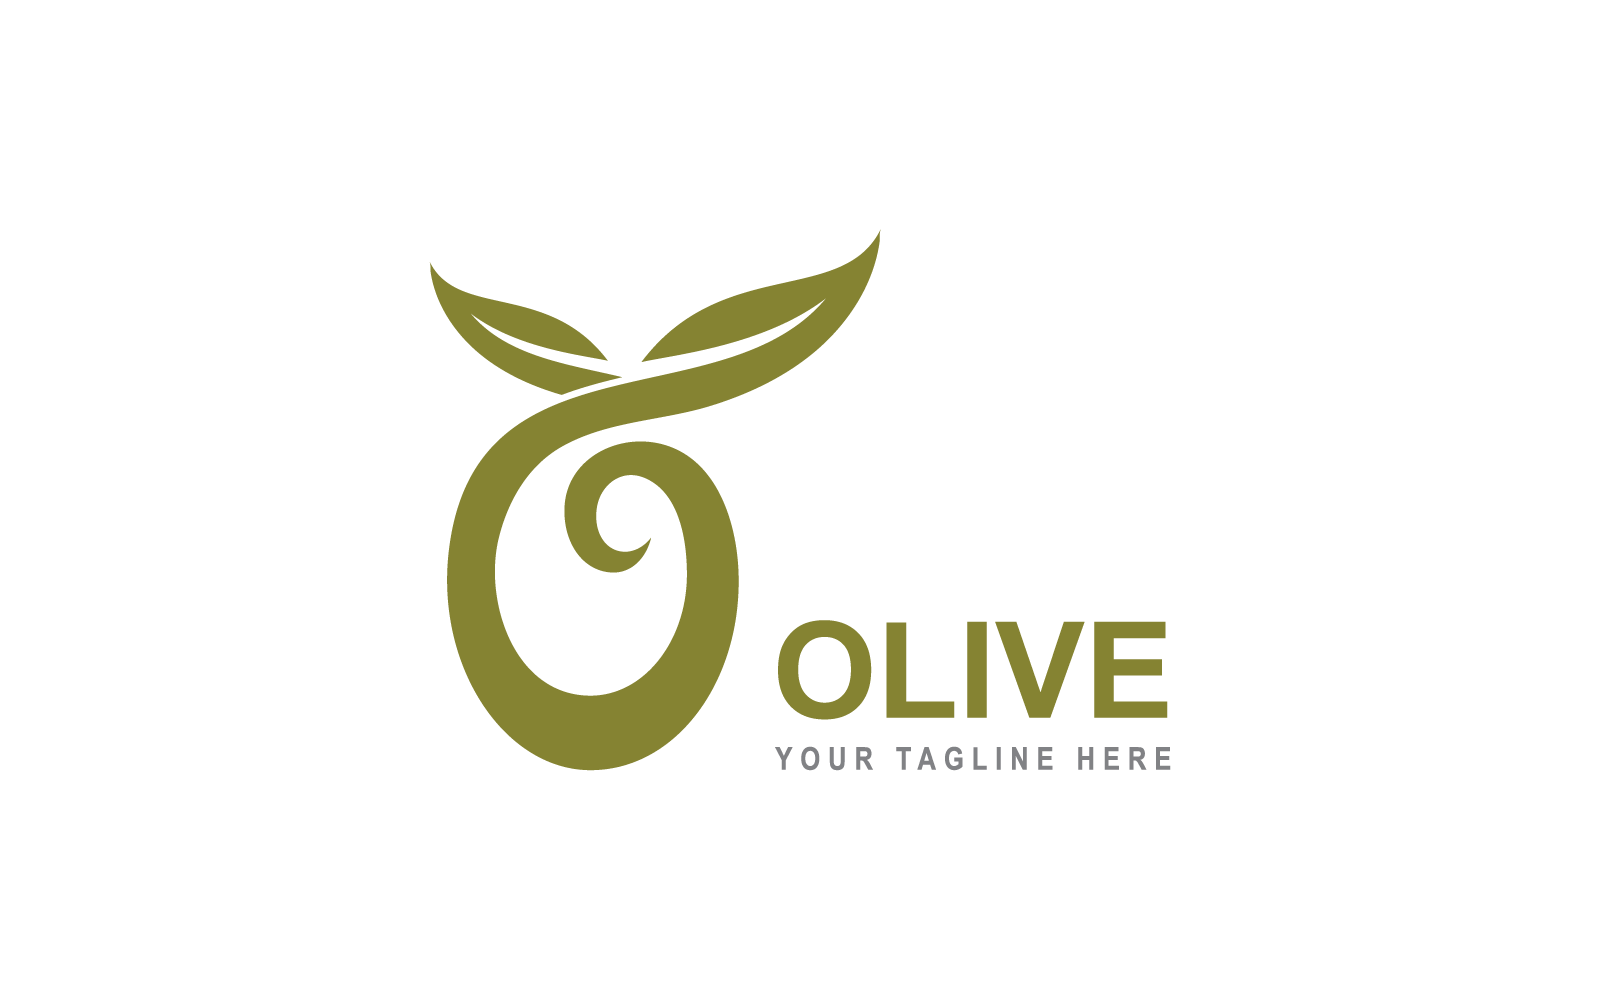 Olivový logo šablony ilustrace vektorové plochý design